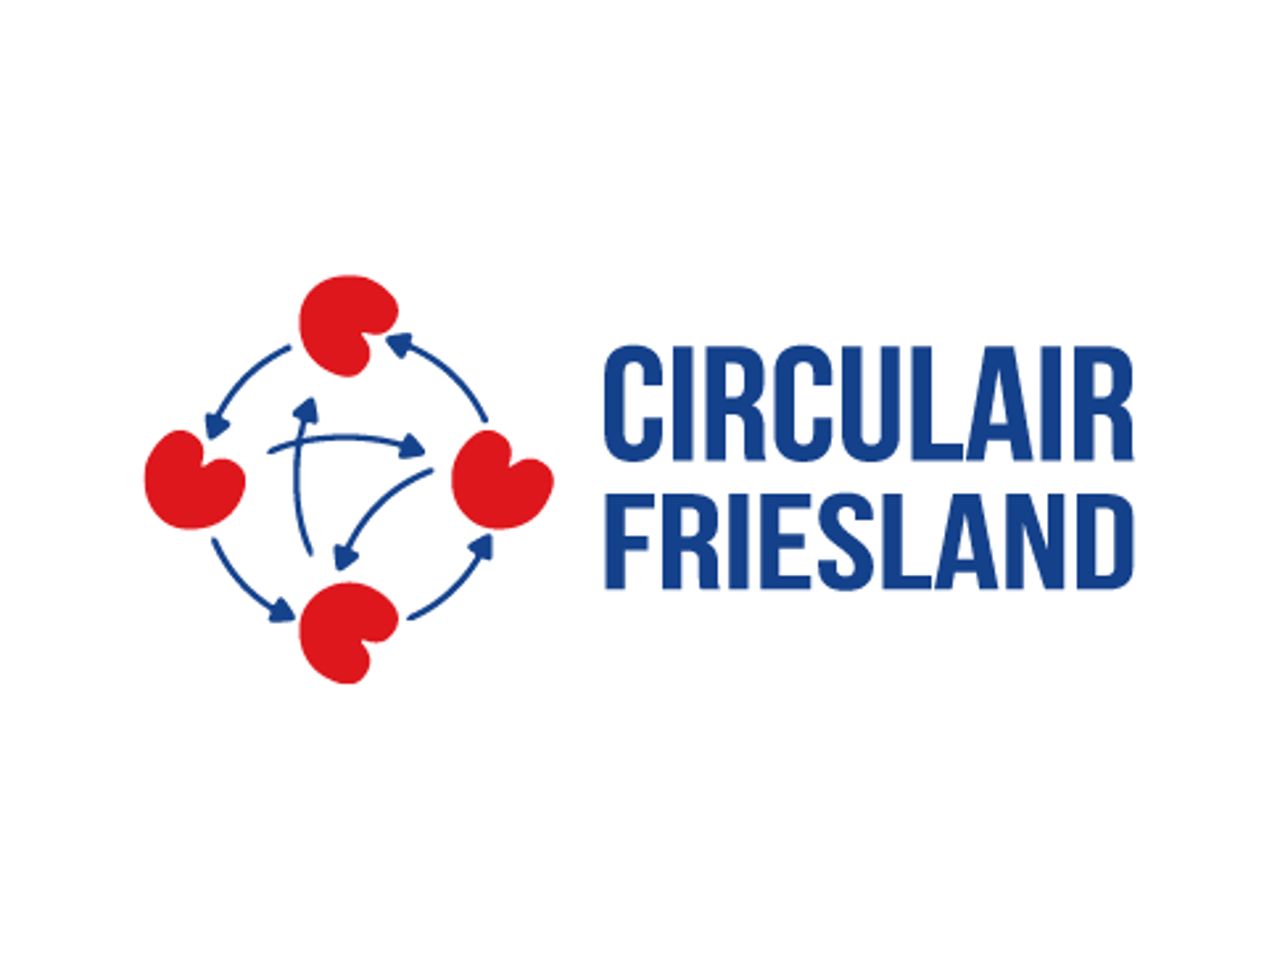 Ecosystemen Circulair Friesland